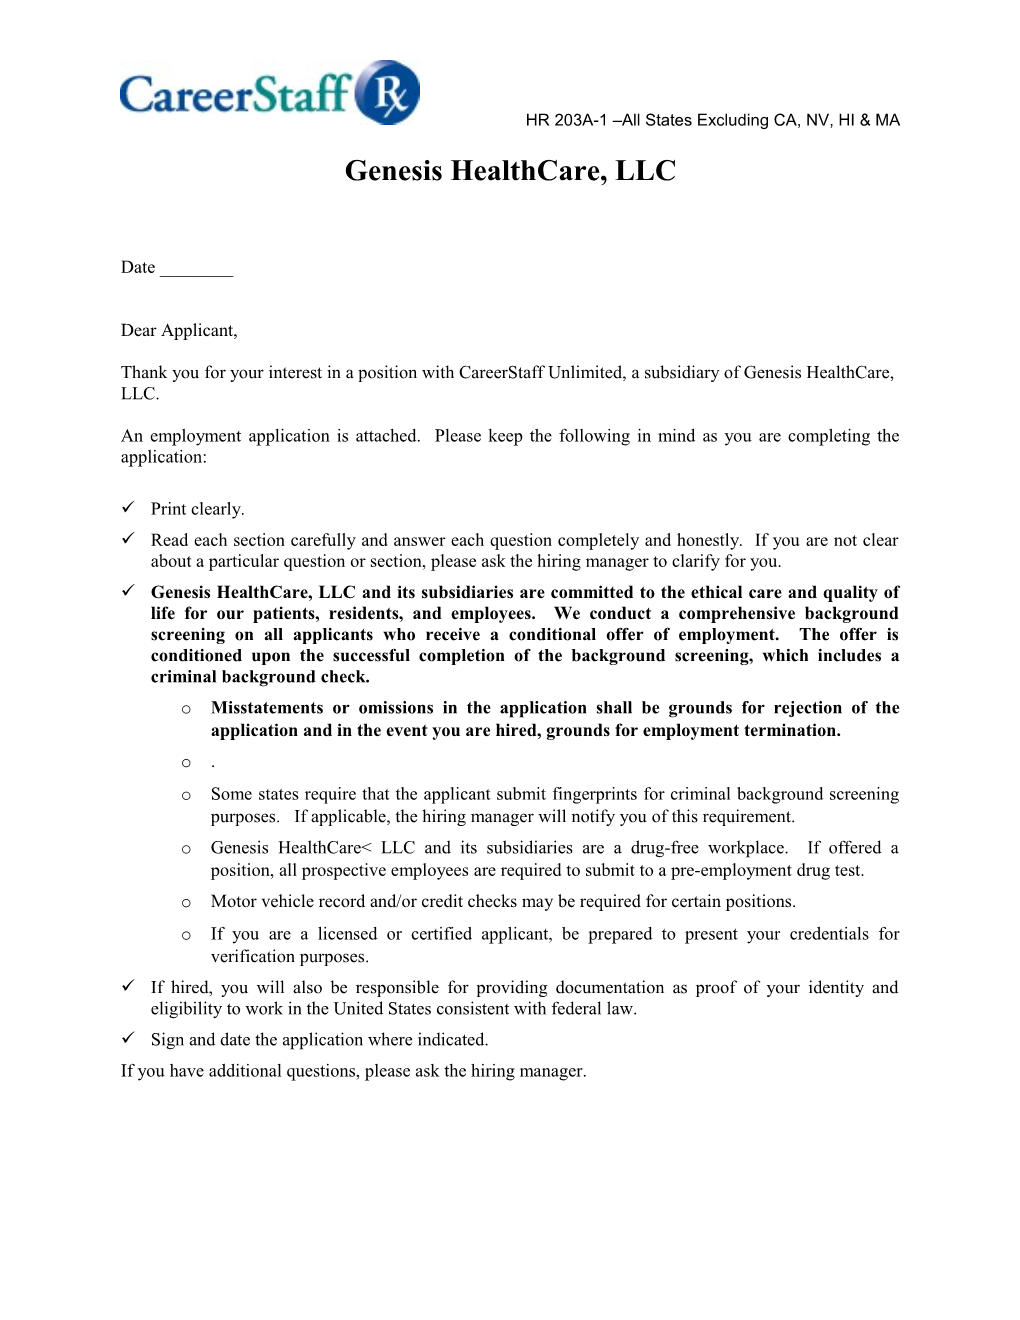 Genesis Healthcare, LLC